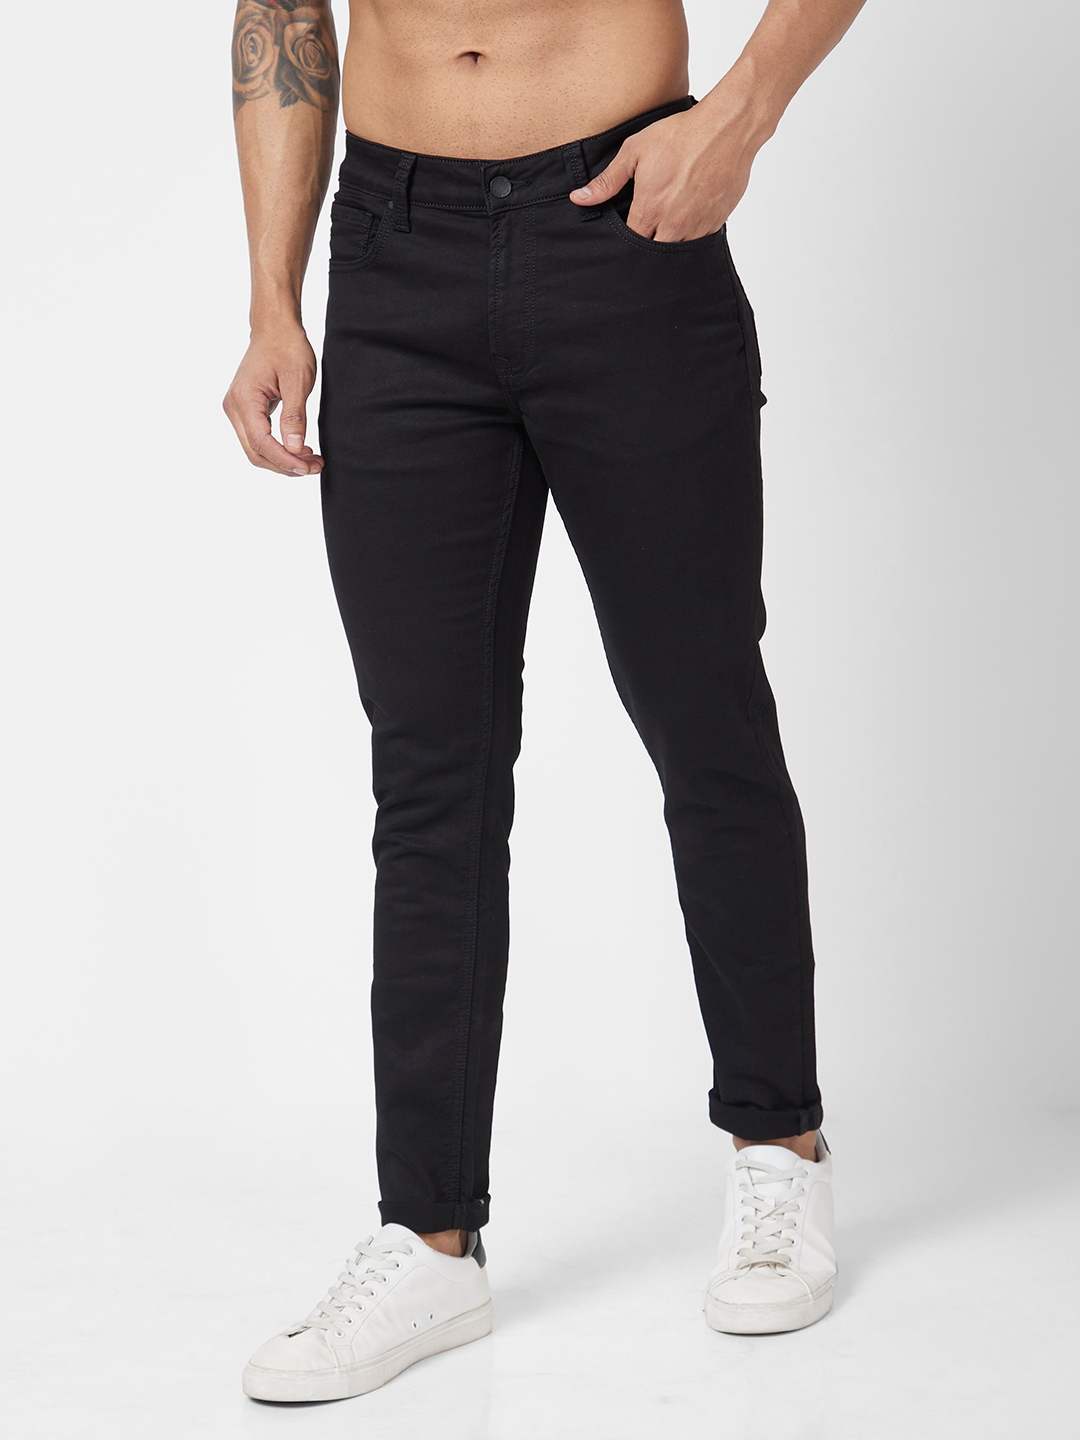 spykar | Spykar Men Black Cotton Stretch Super Slim Fit Tapered Length Clean Look Low Rise Jeans (Super Skinny) 3